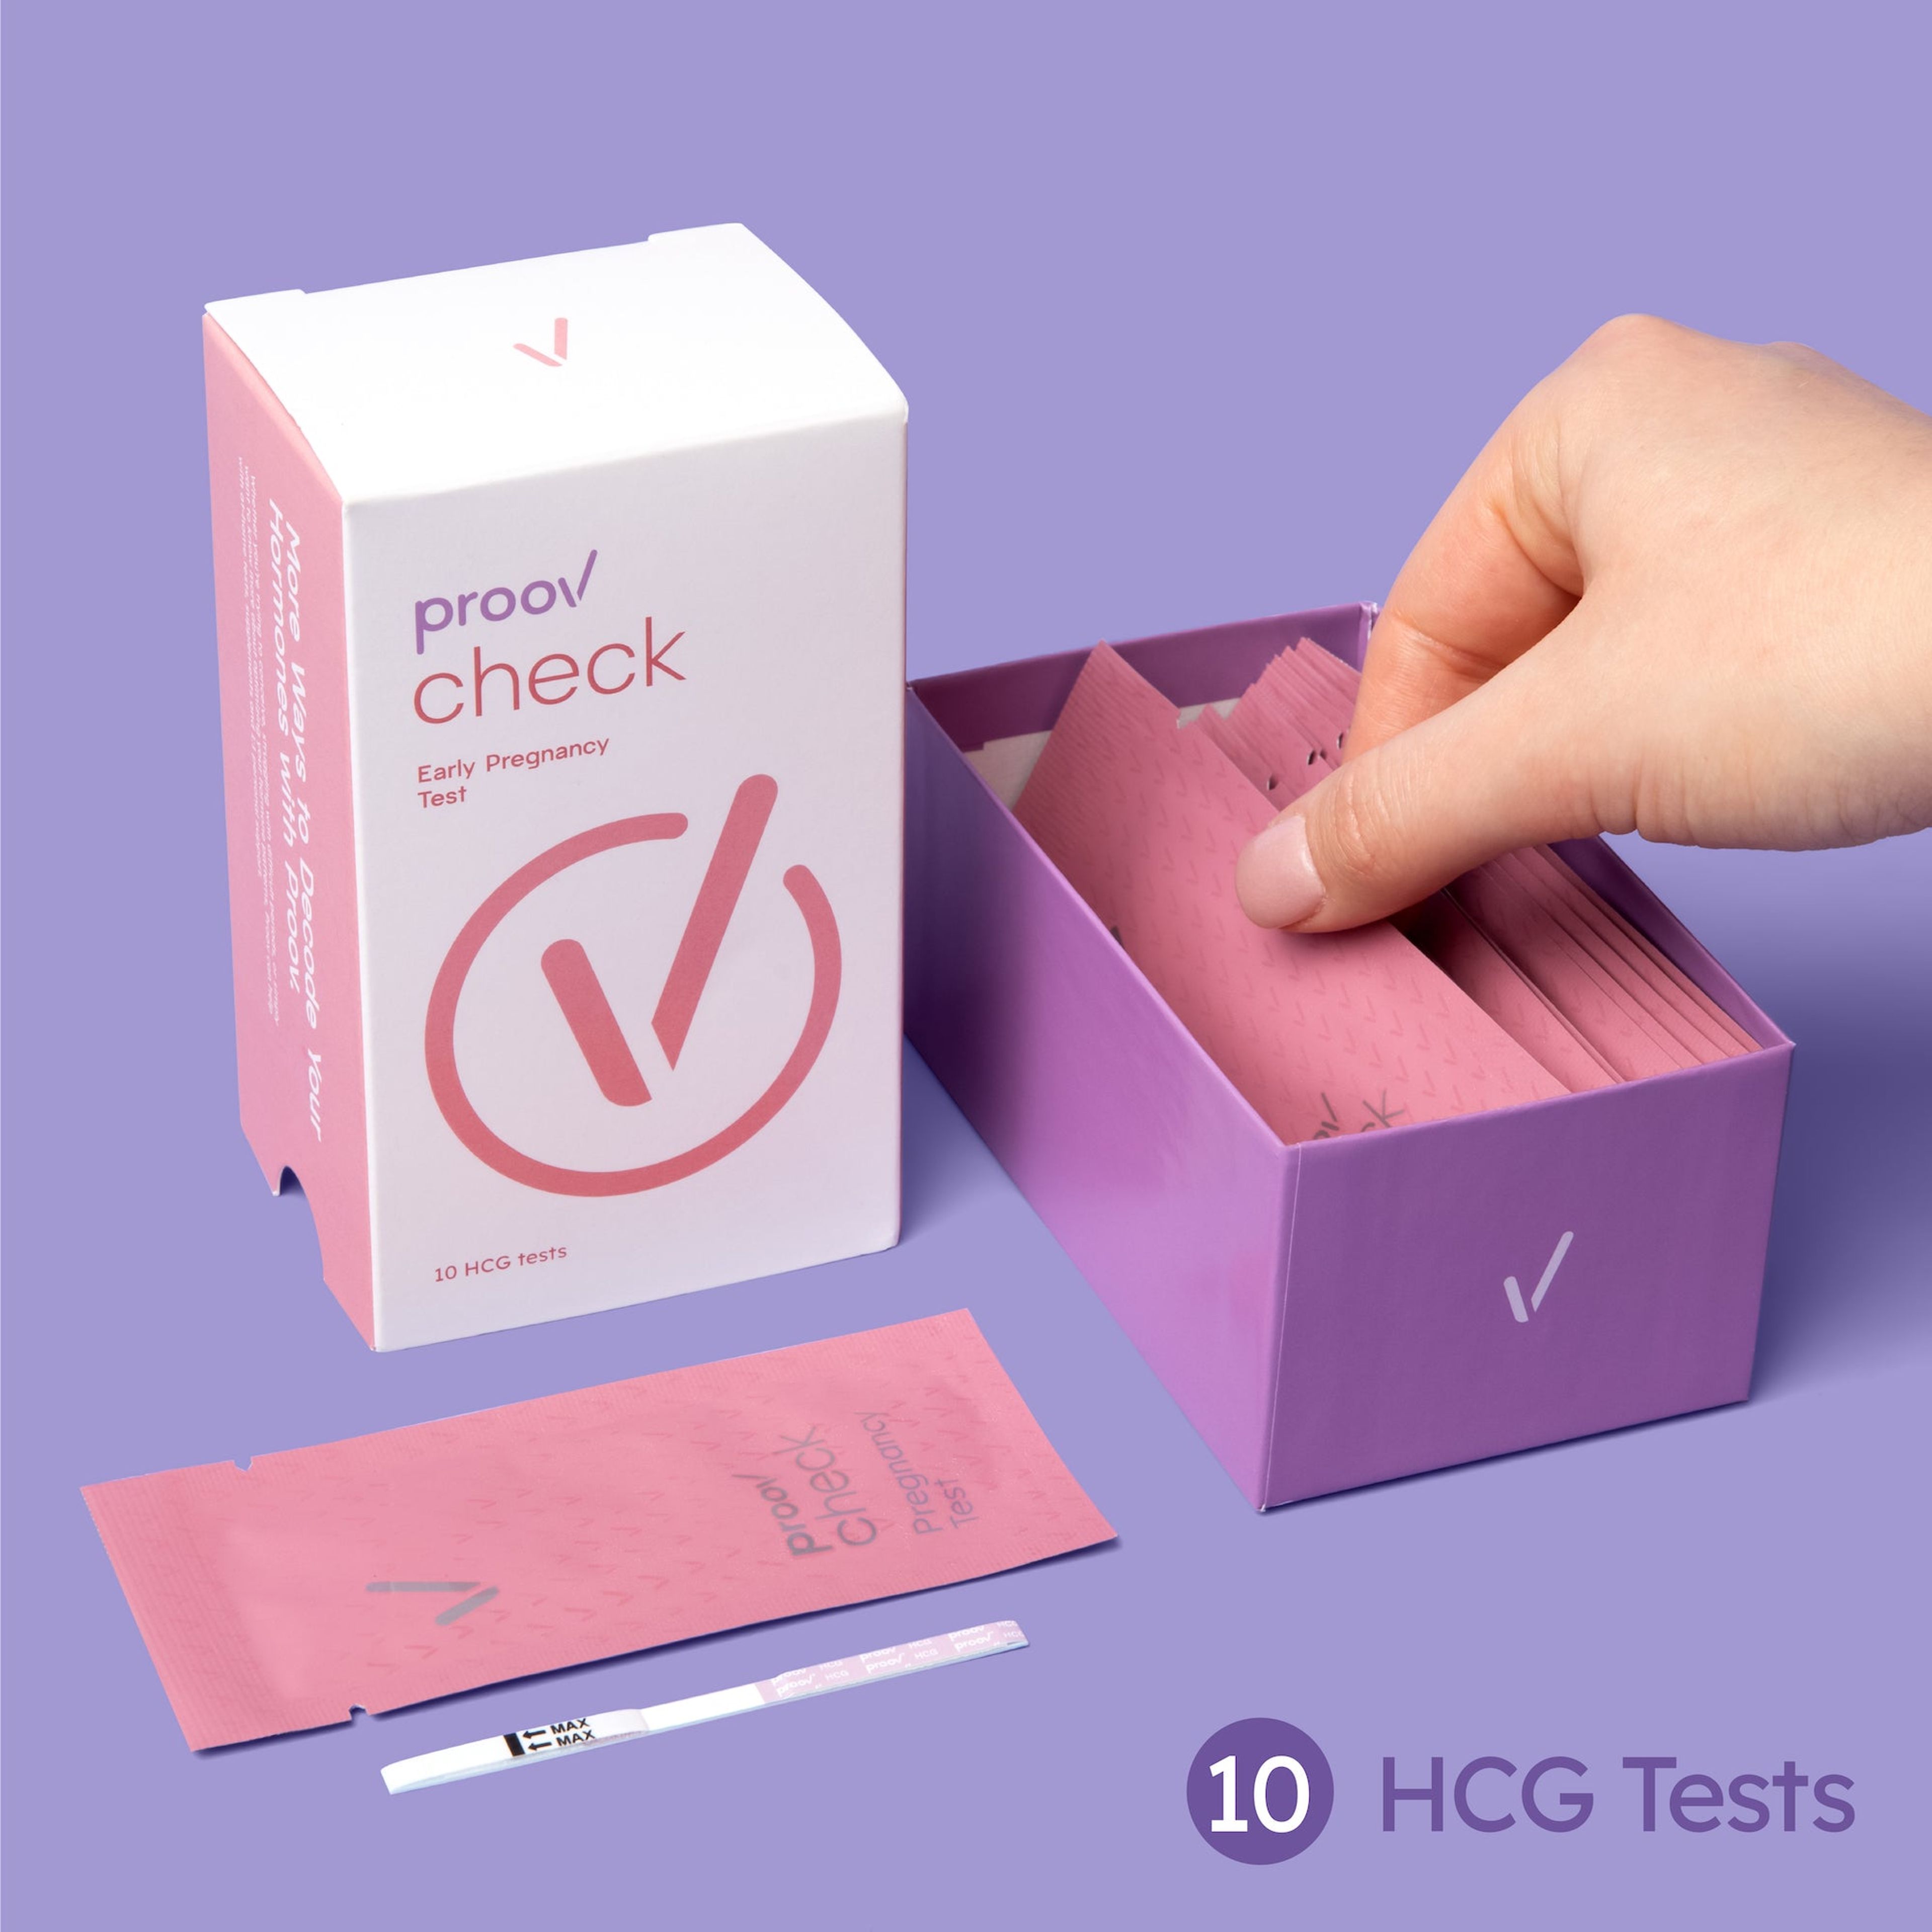 Check Pregnancy Tests